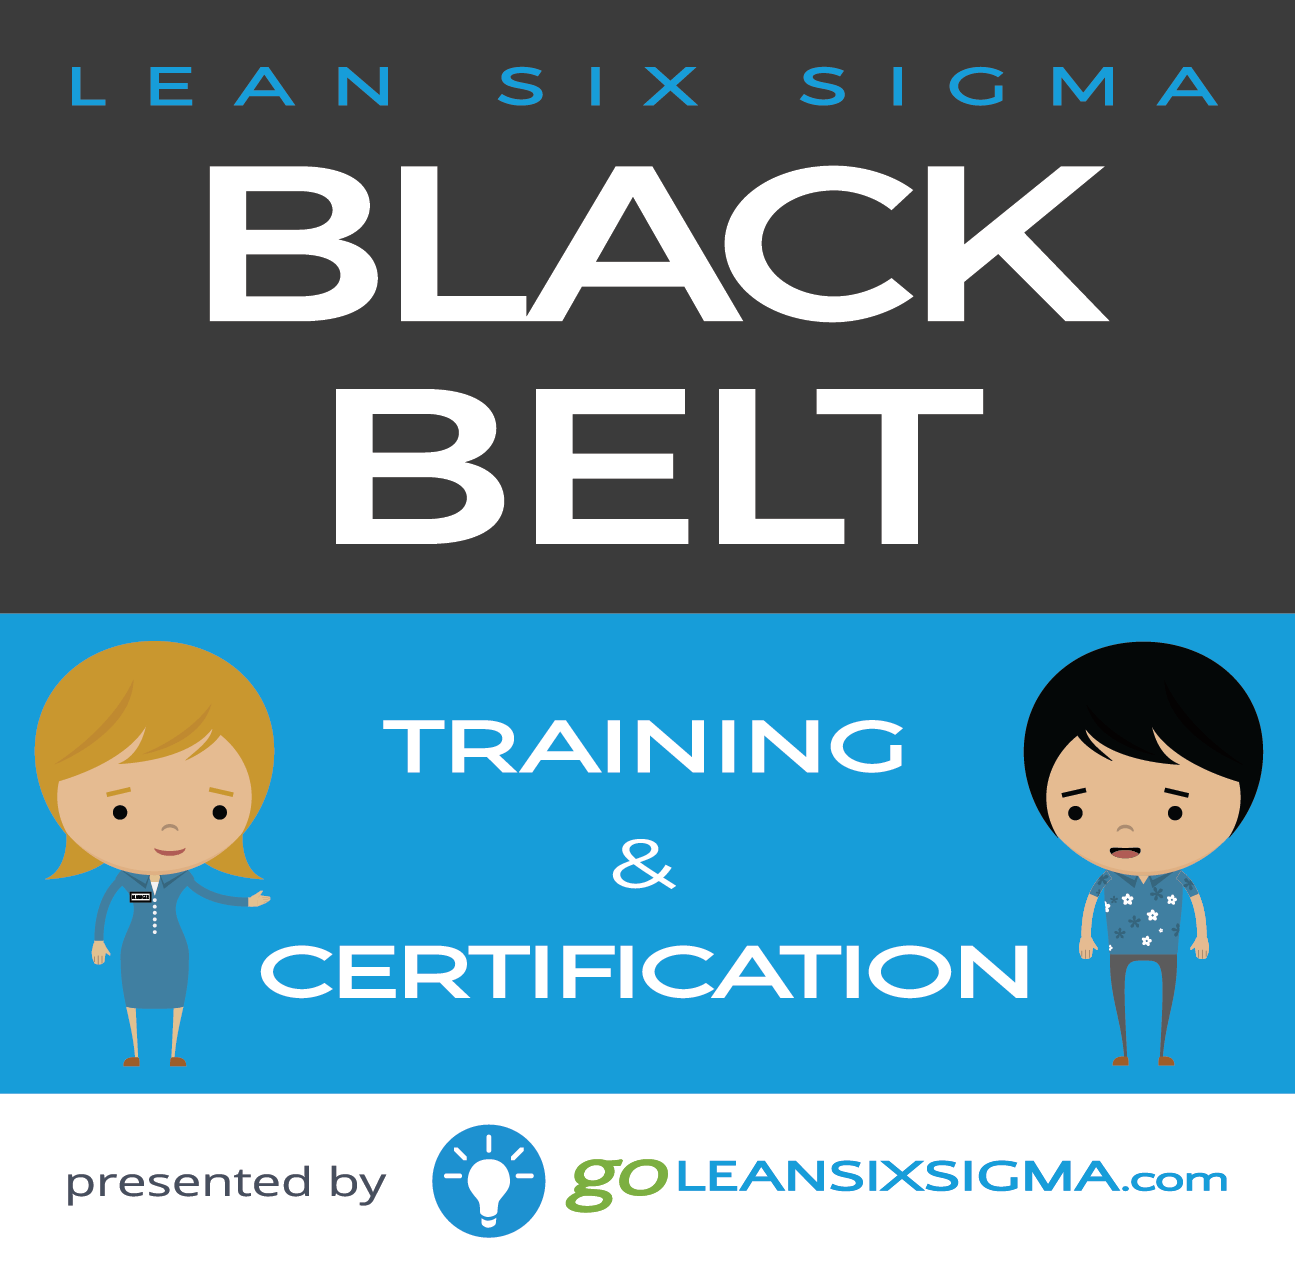 Lean Six Sigma Black Belt Training & Certification